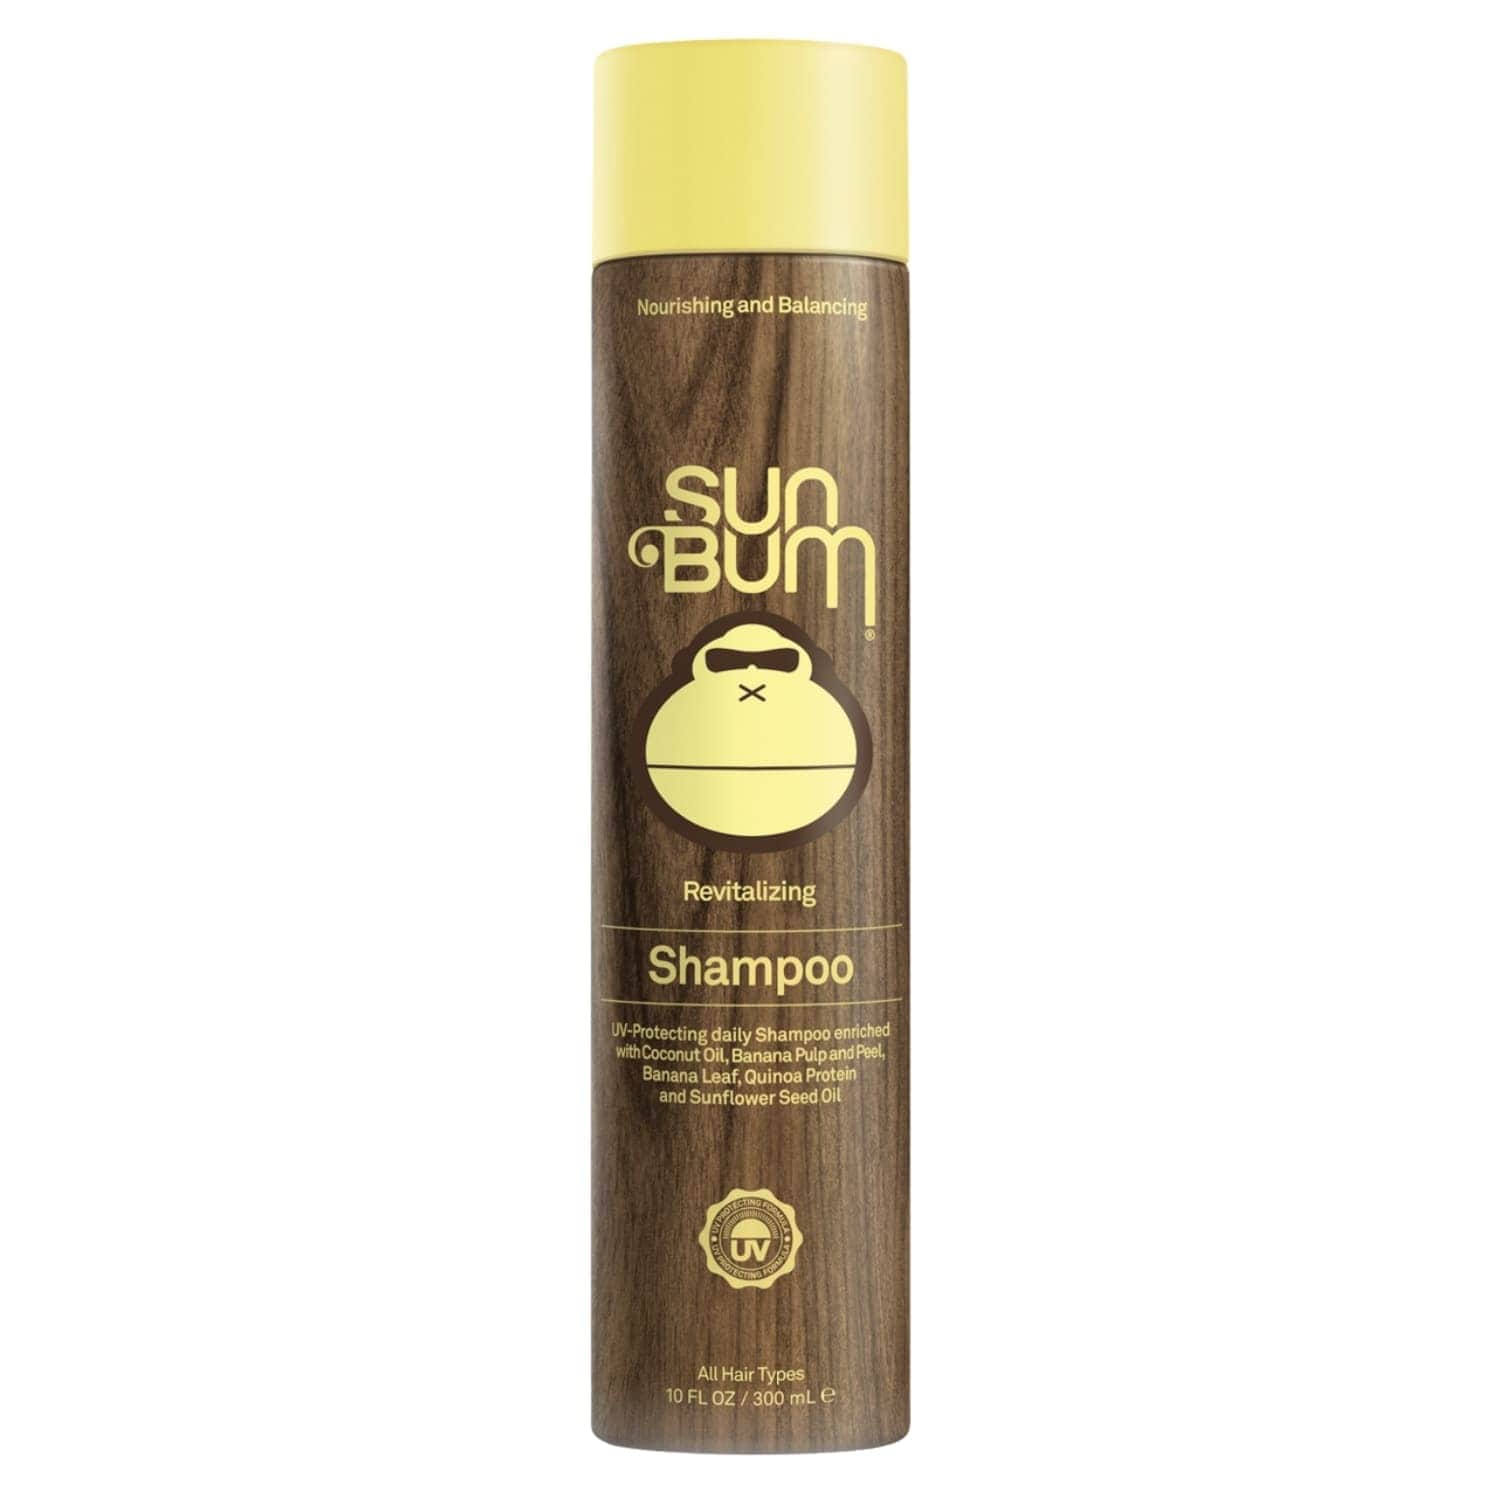 Sun Bum Revitalizing Shampoo 300ml - Hair Shampoo/Conditioner by Sun Bum 300ml